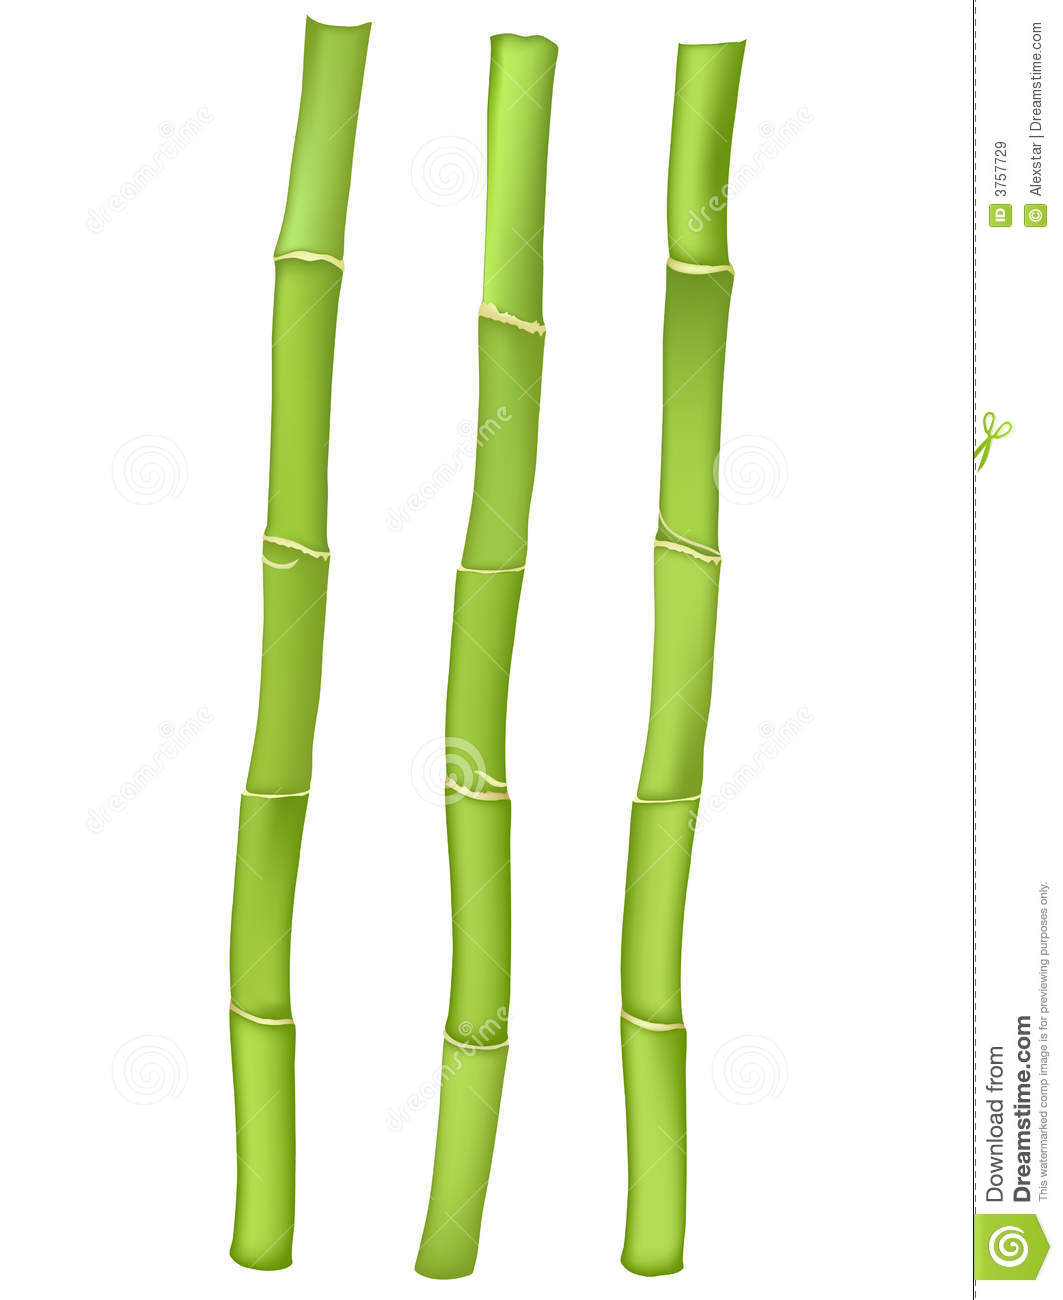 Bamboo bamboo stick